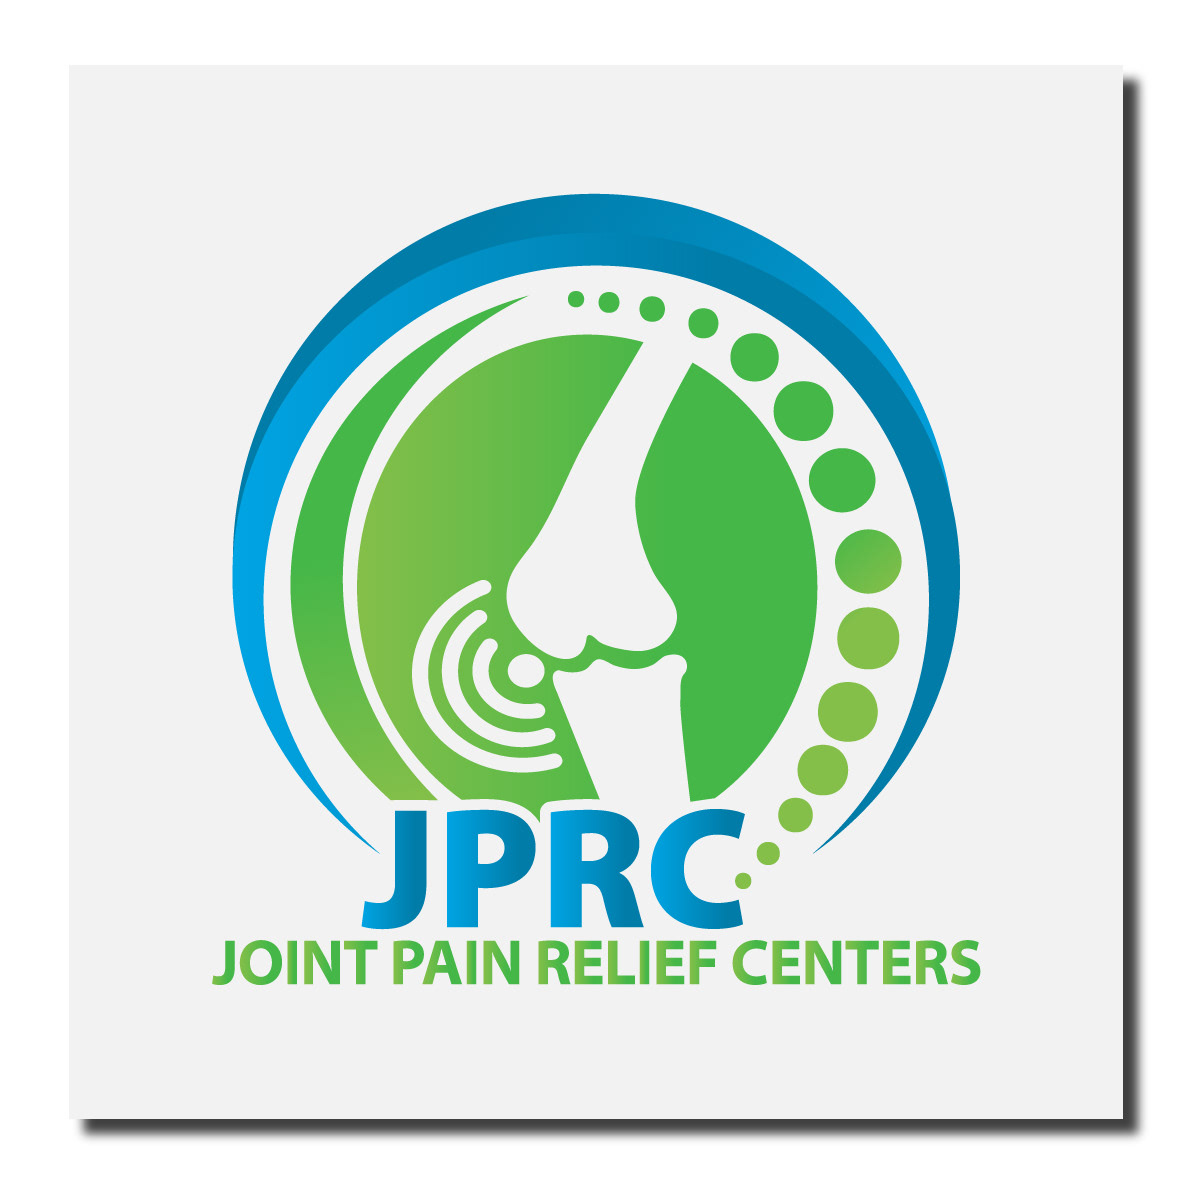 Joint pain relief center identity Logo Design brand identity medicine hospital heal